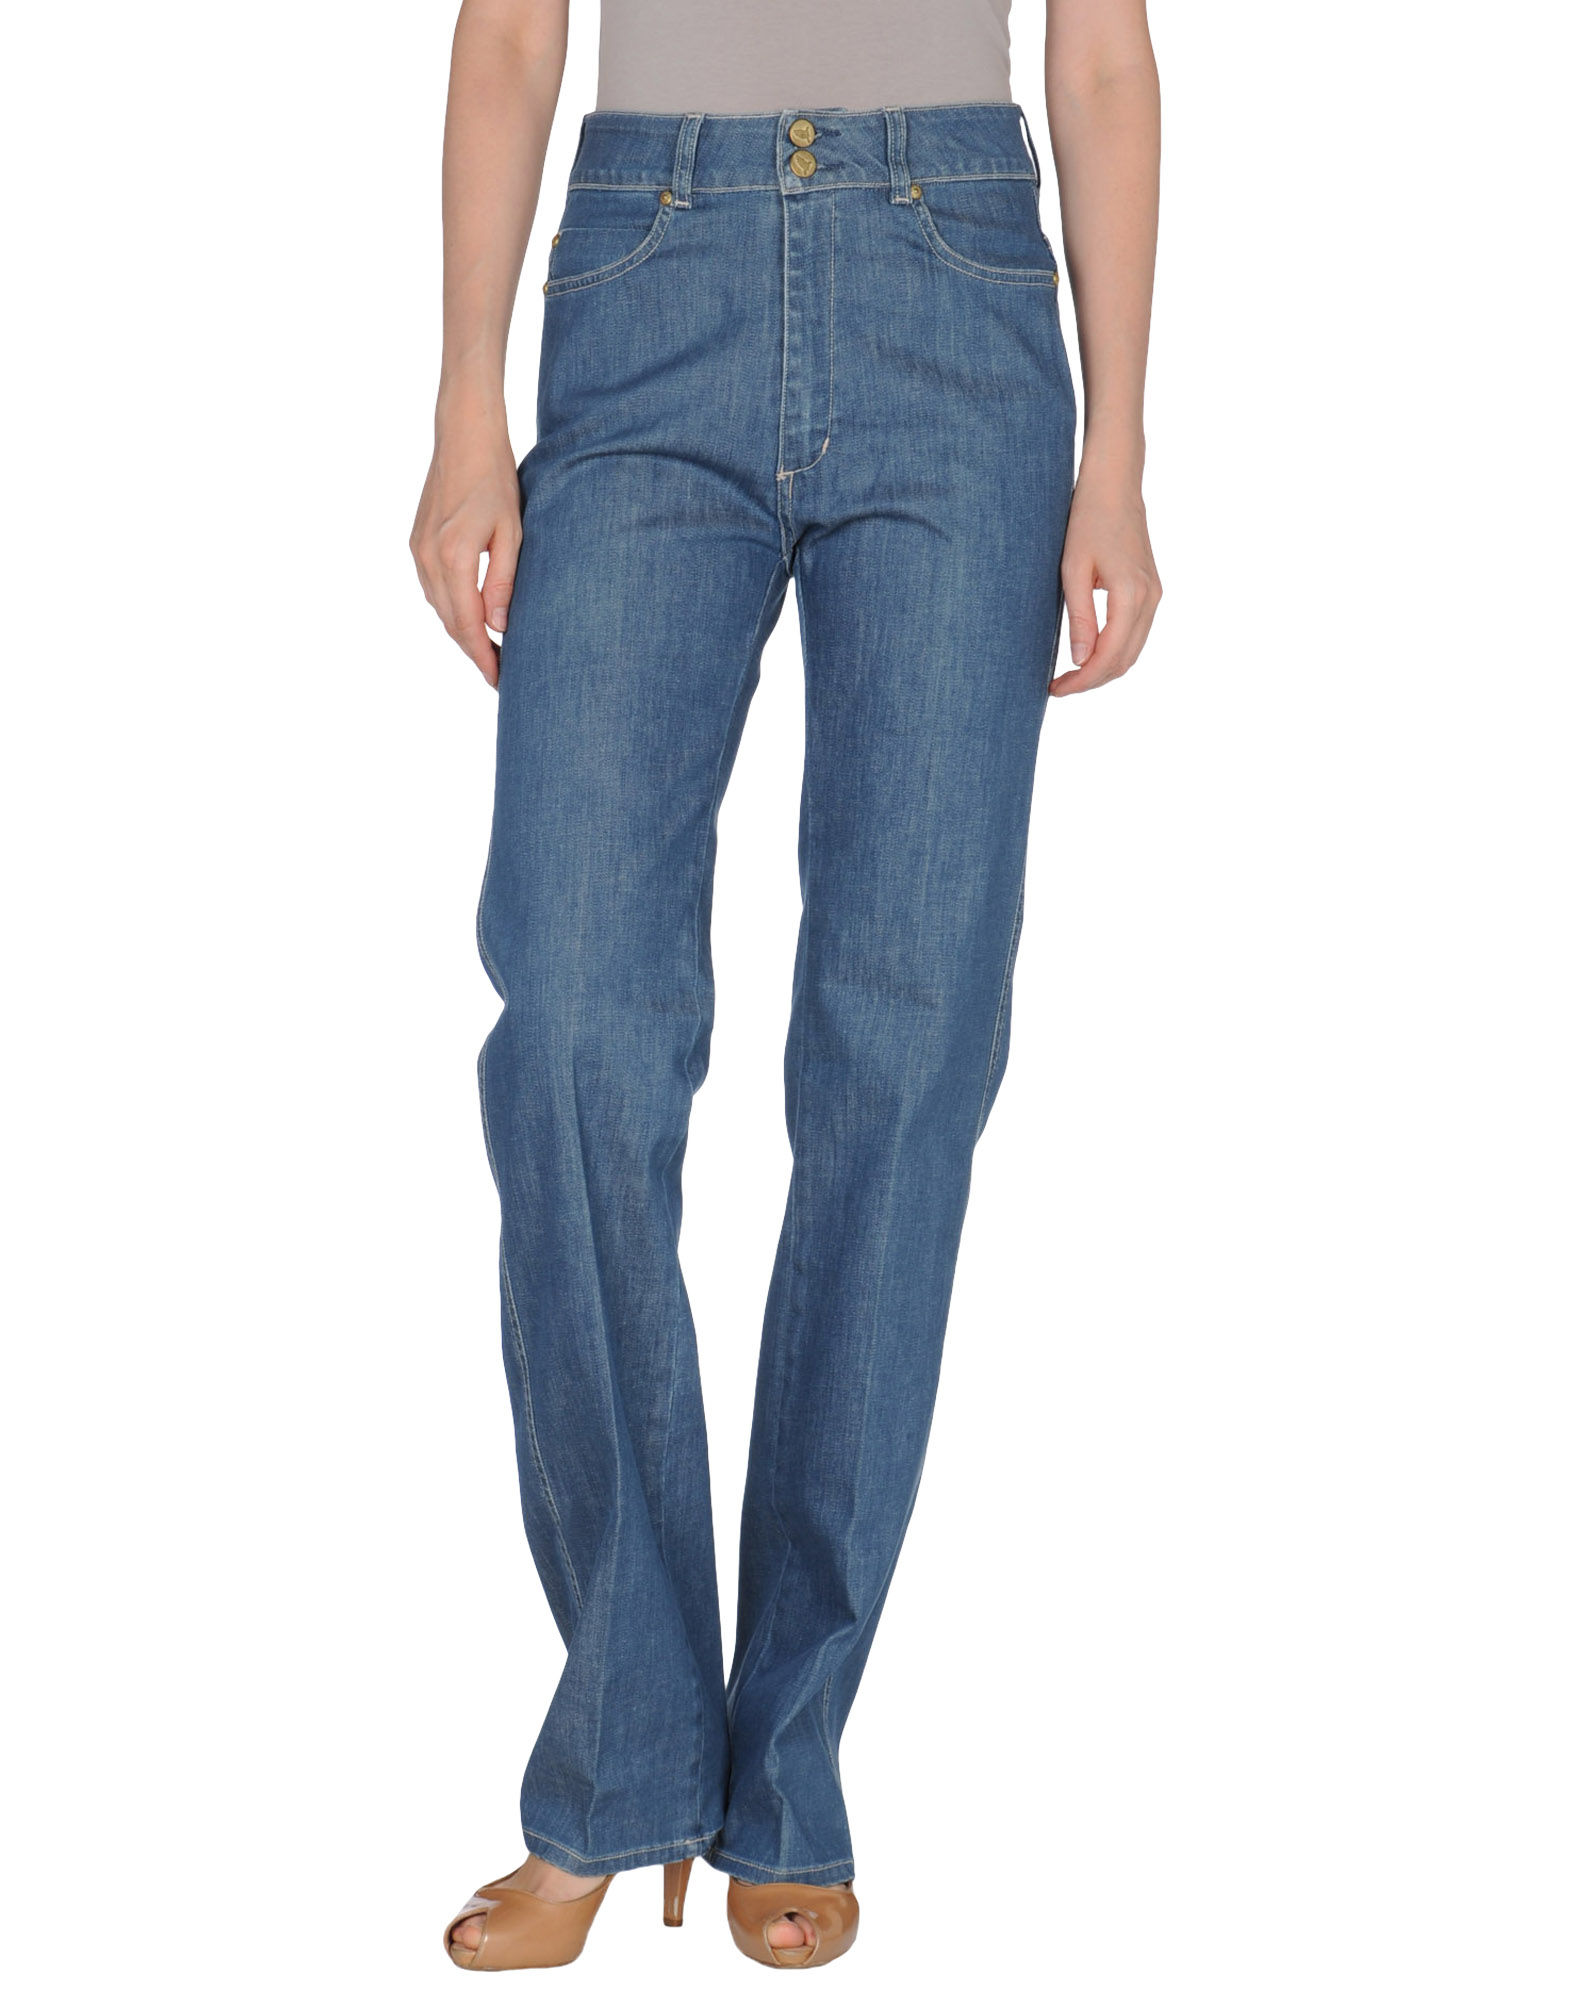 Mih jeans Denim Trousers in Blue | Lyst